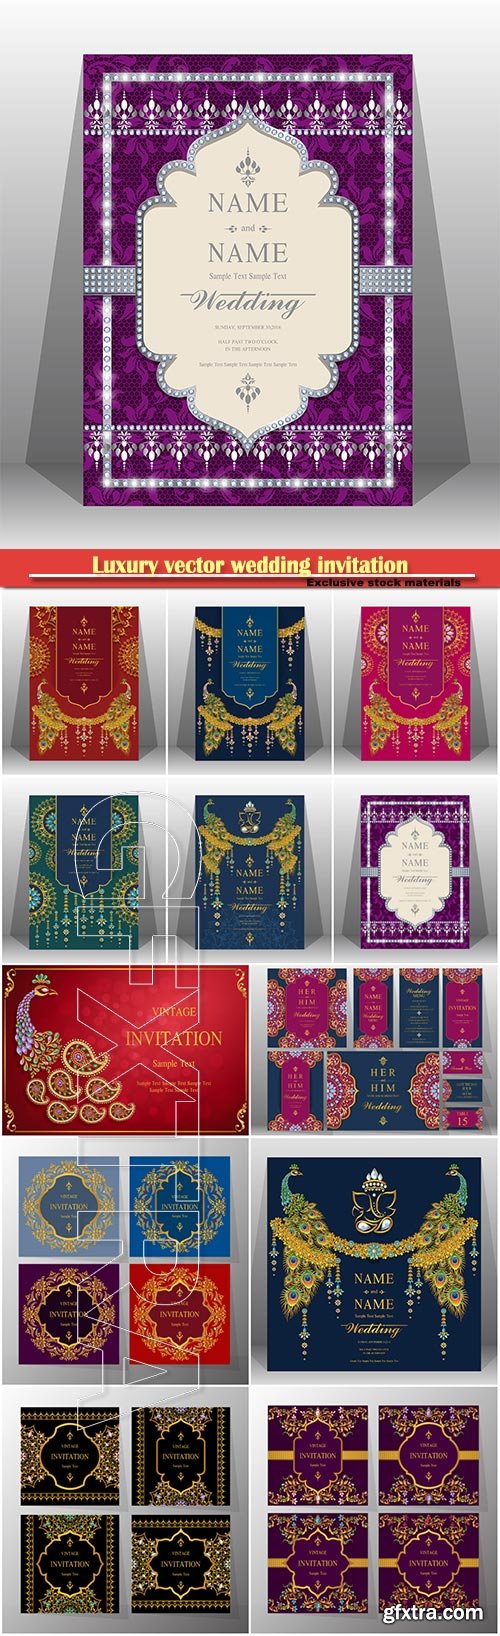 Luxury vector wedding invitation in oriental style